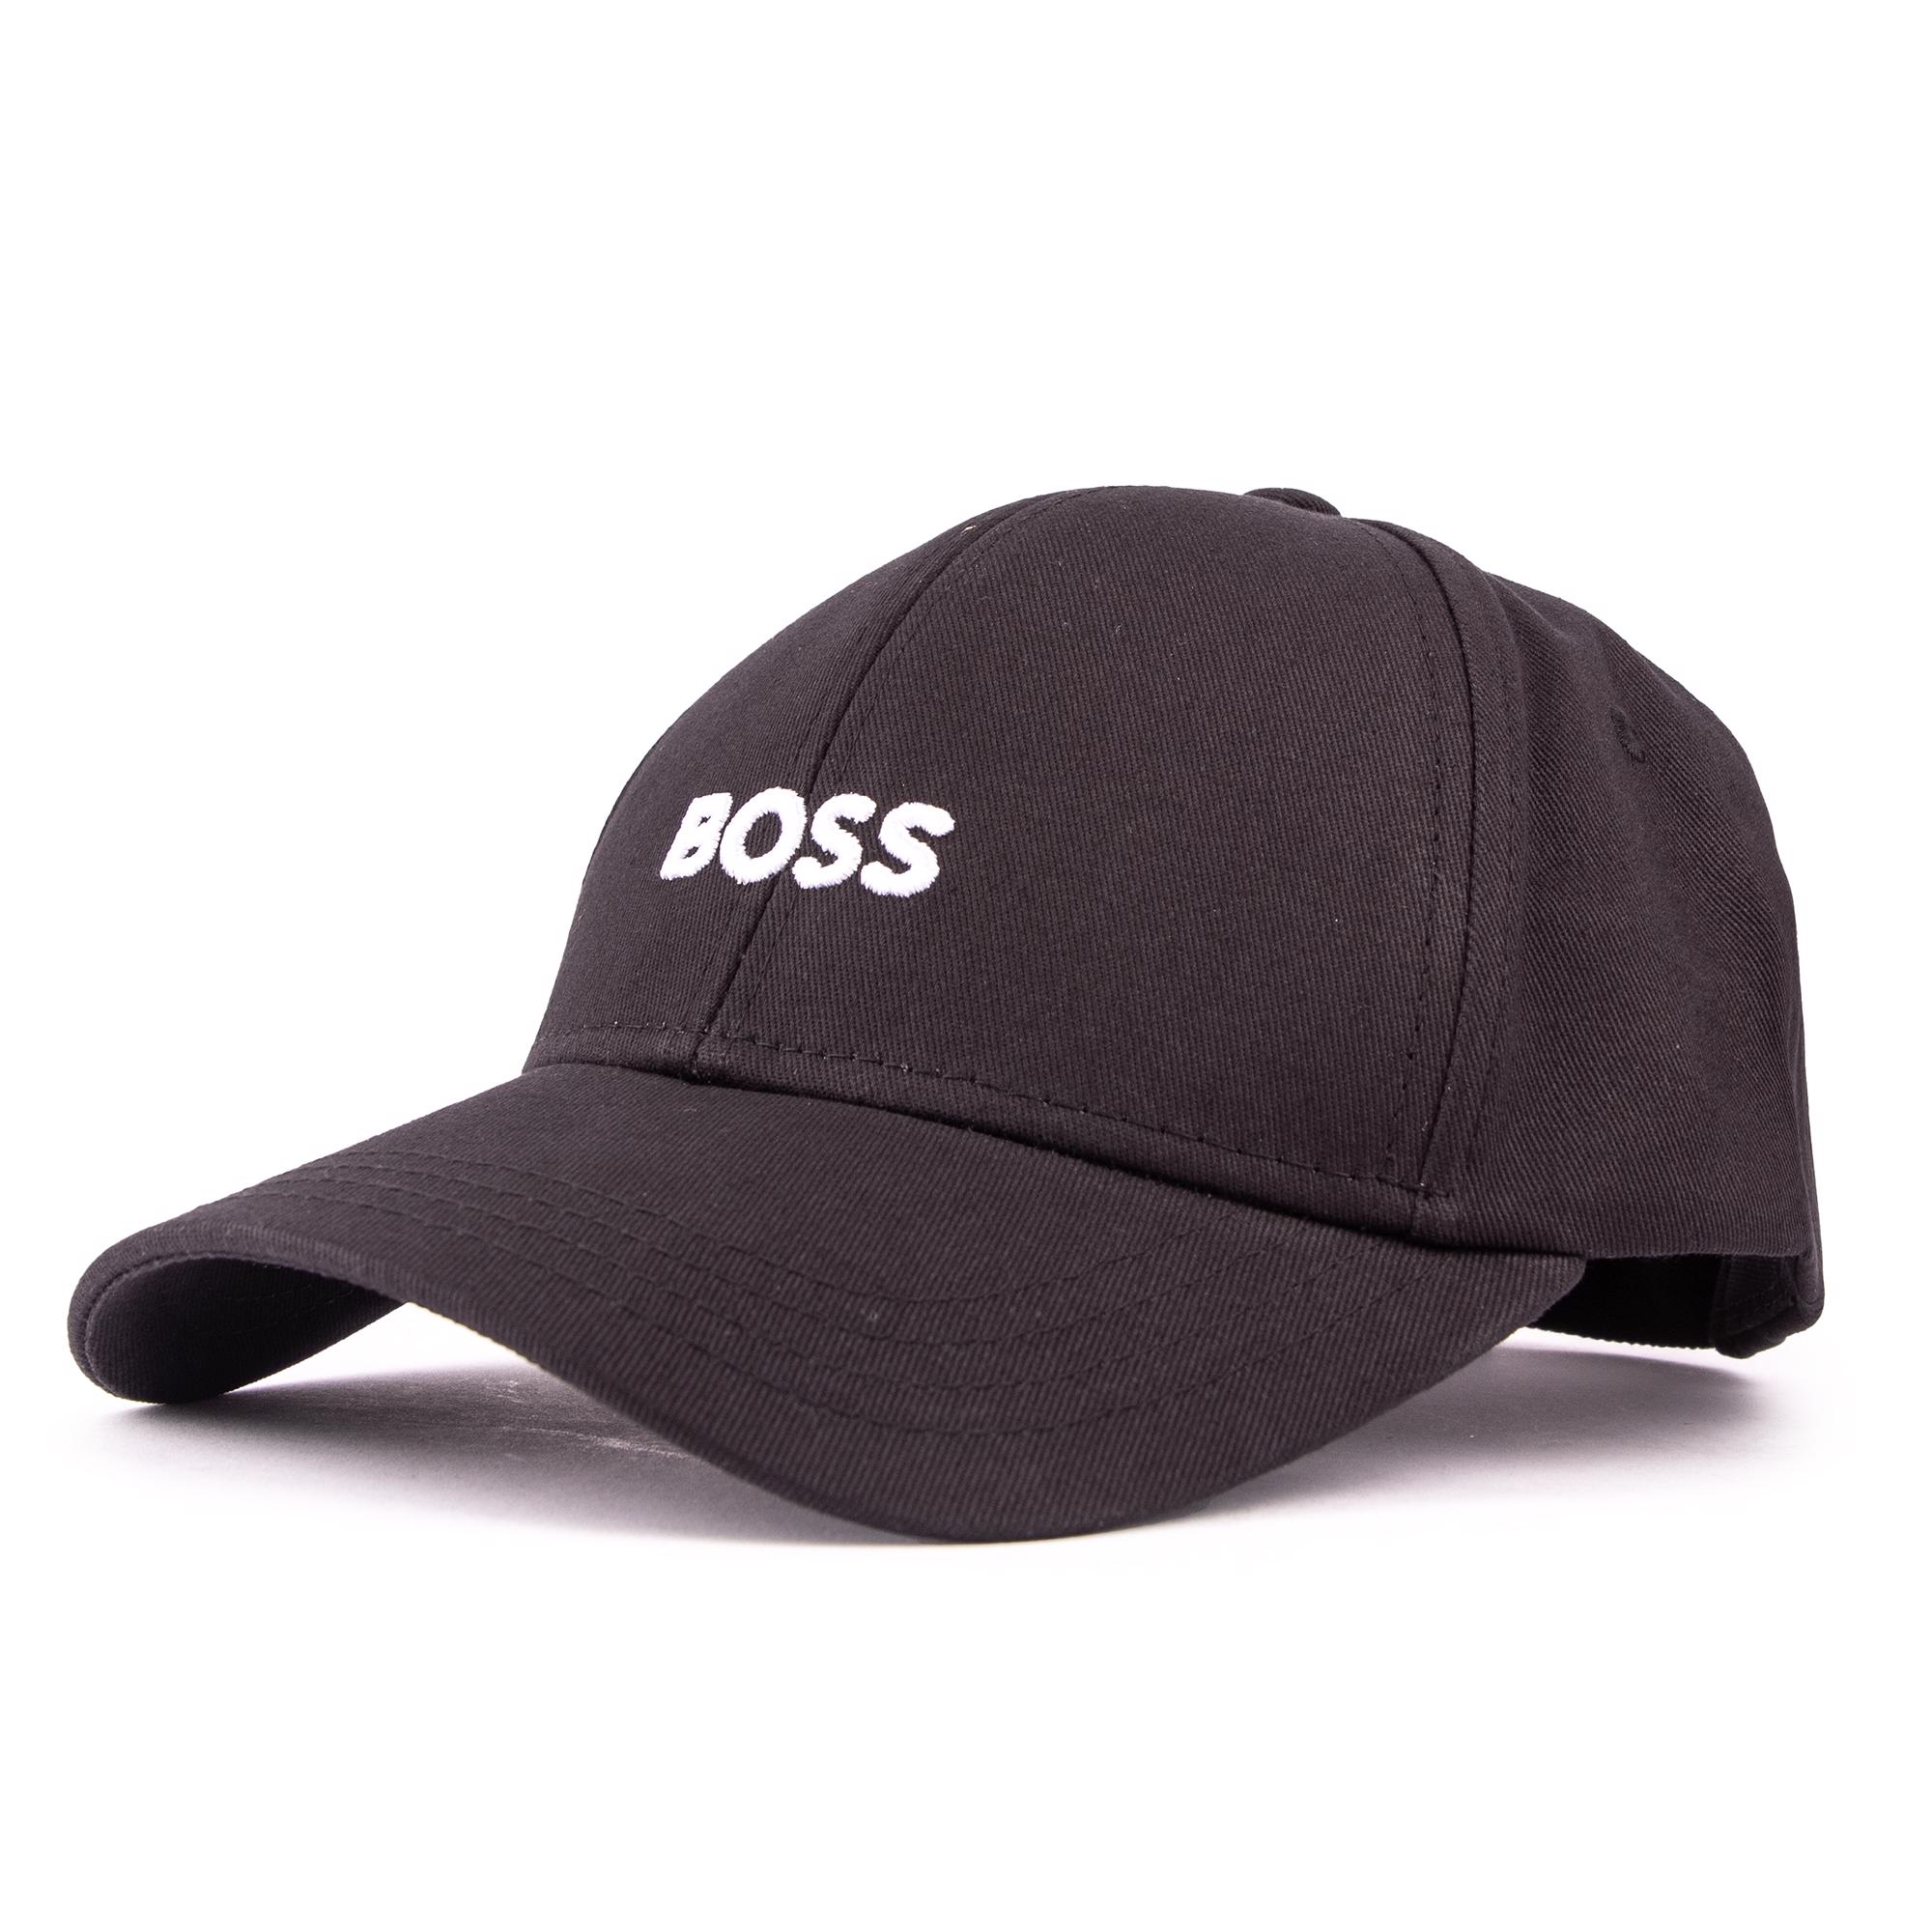 BOSS Mens Zed | Hats Cap eBay Black